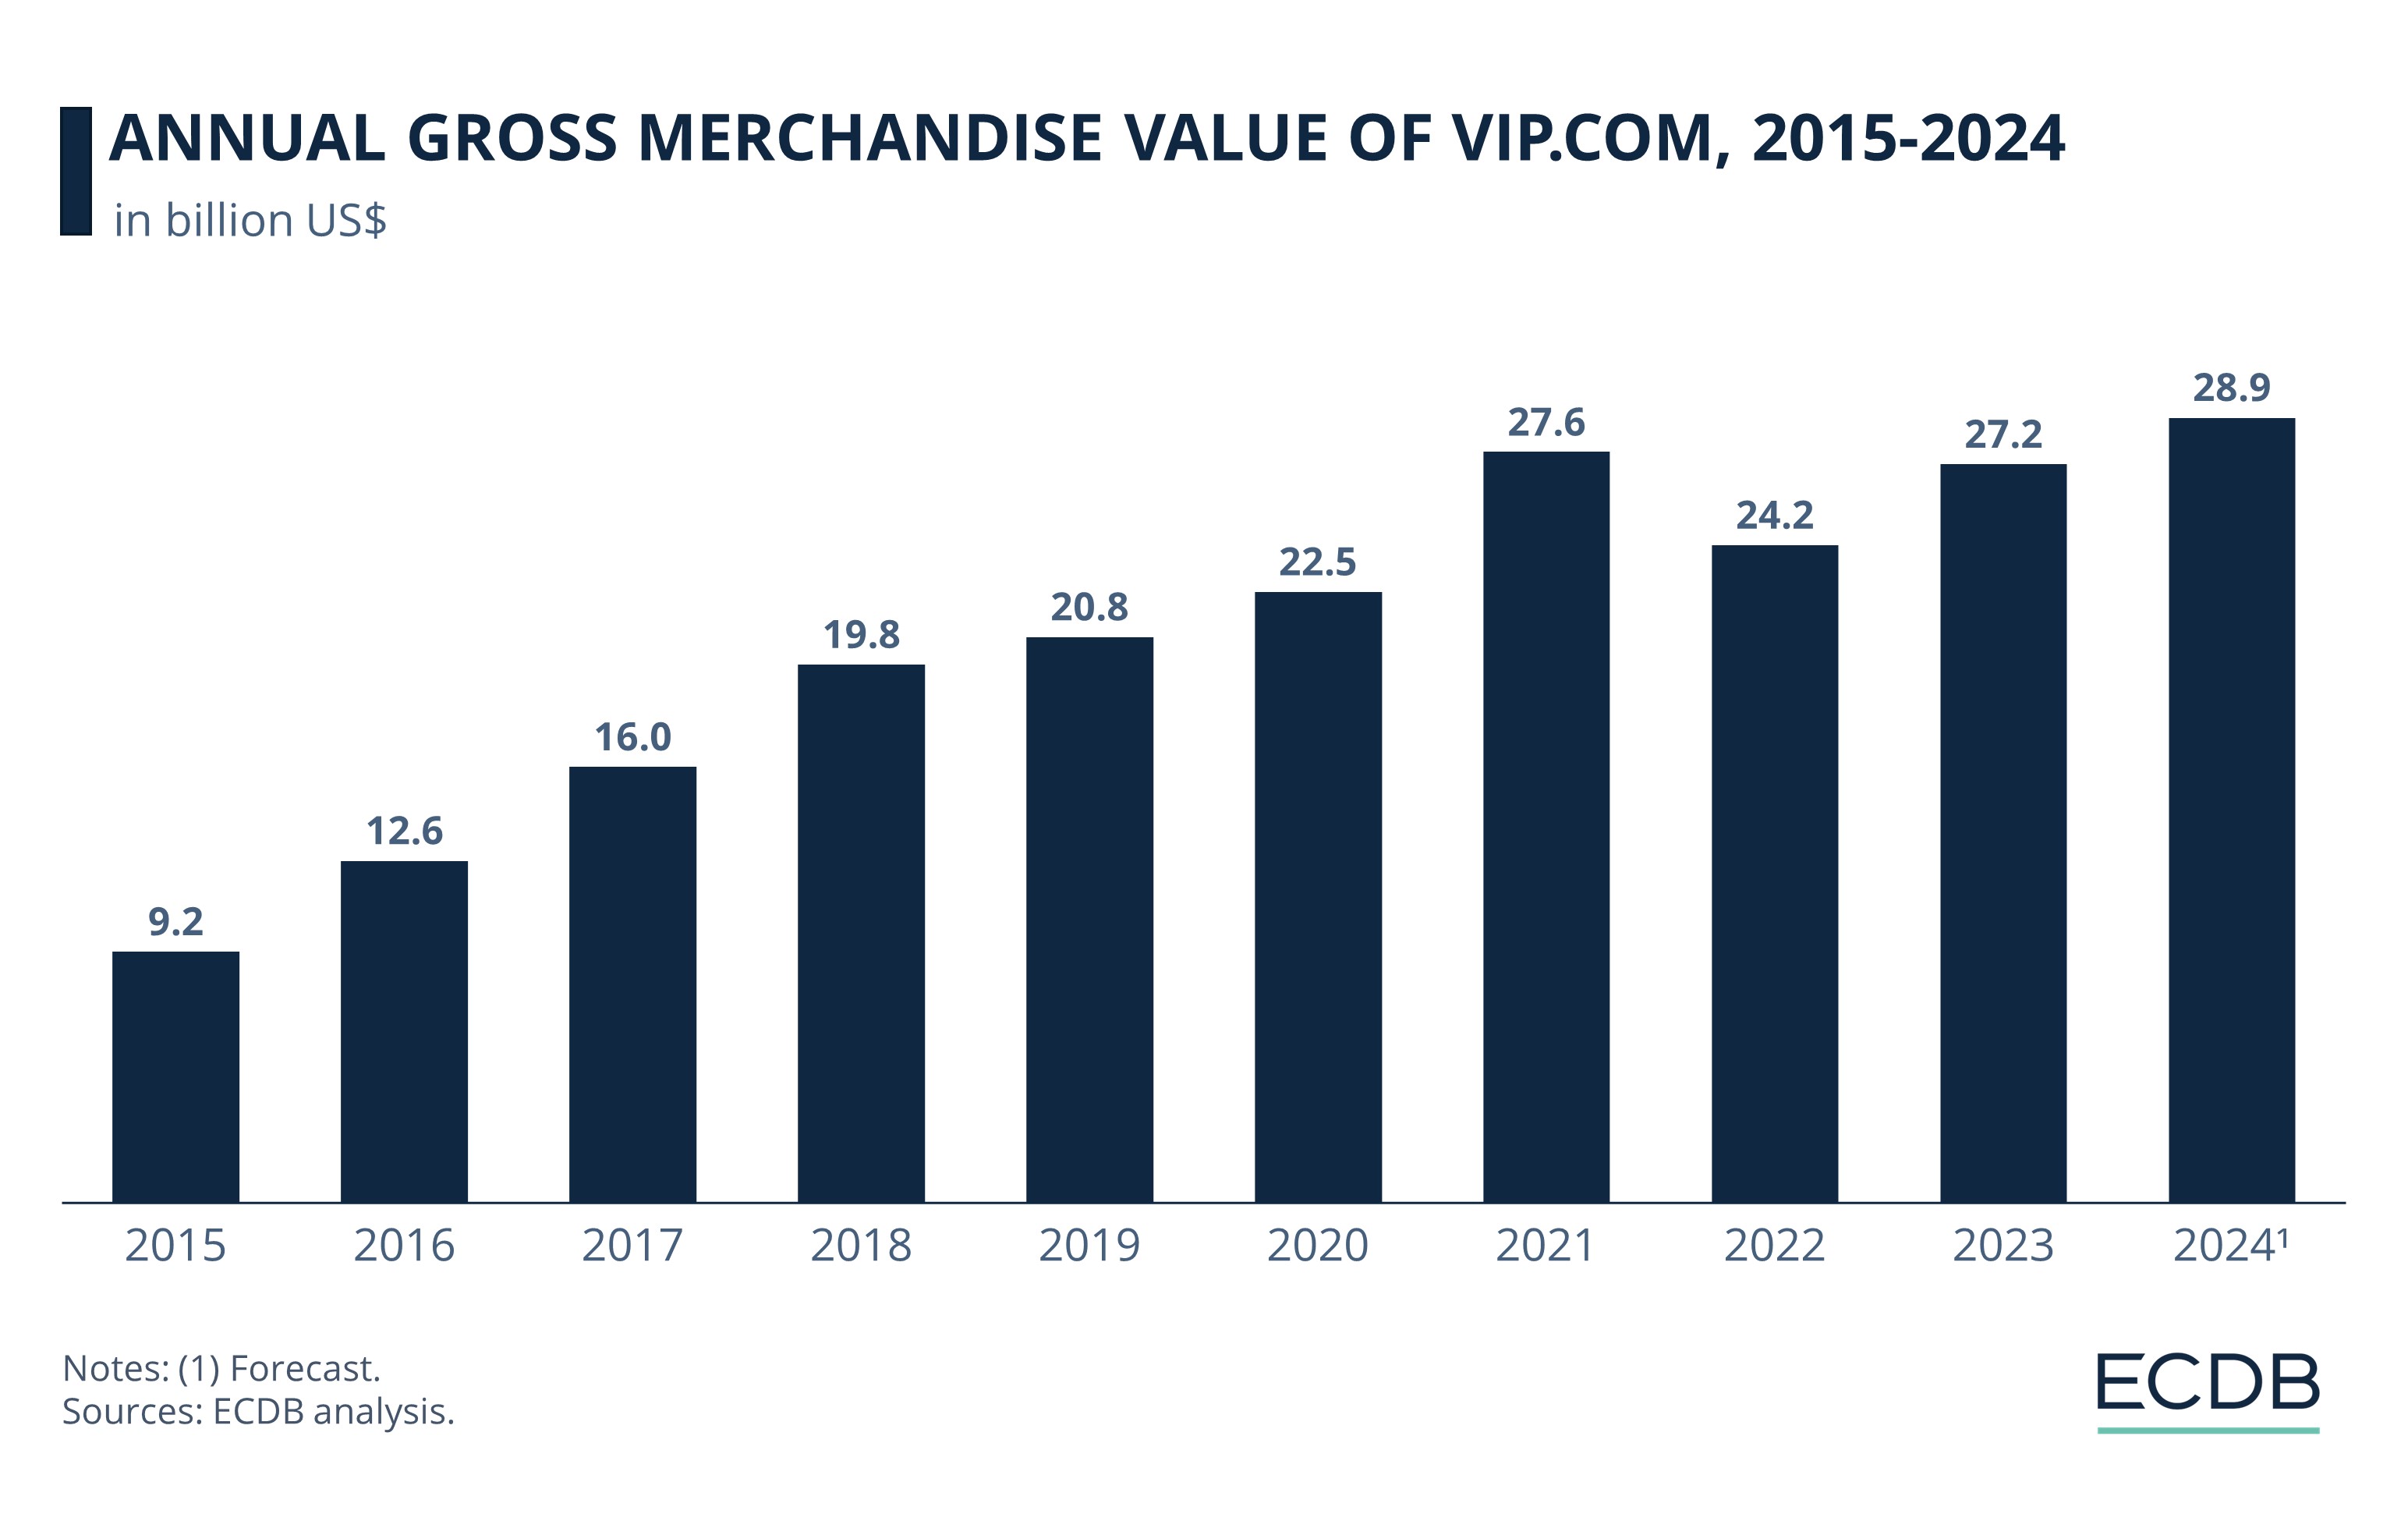 Annual Gross Merchandise Value of VIP.com, 2015-2024